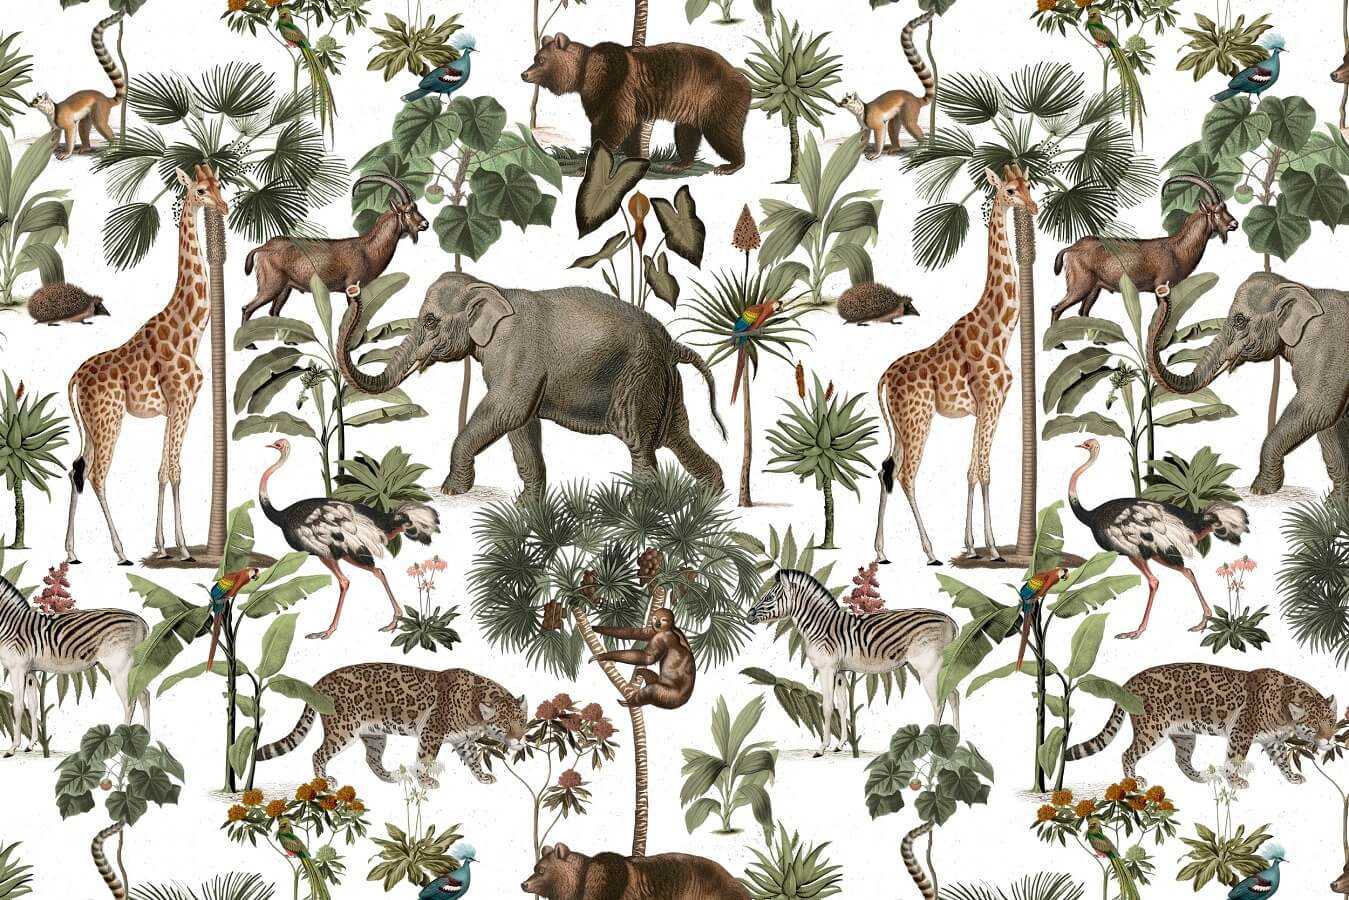 Jungle Animals Mural Wallpaper (SqM)